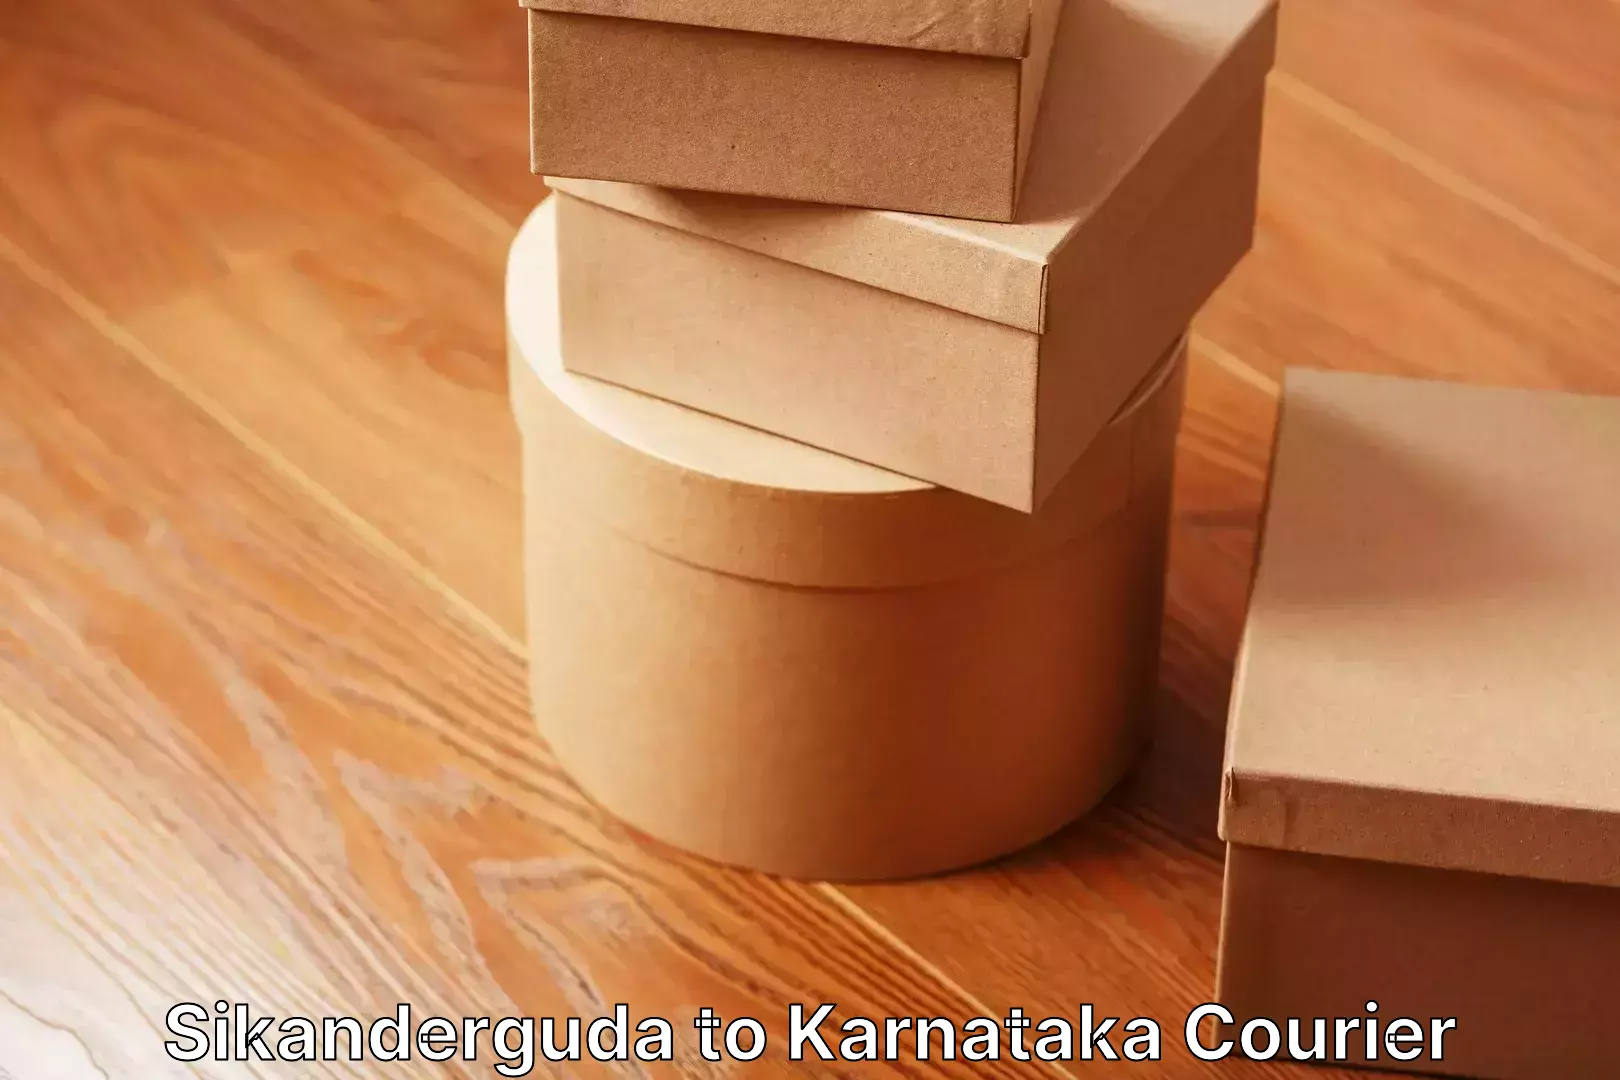 Full-service movers Sikanderguda to Karnataka